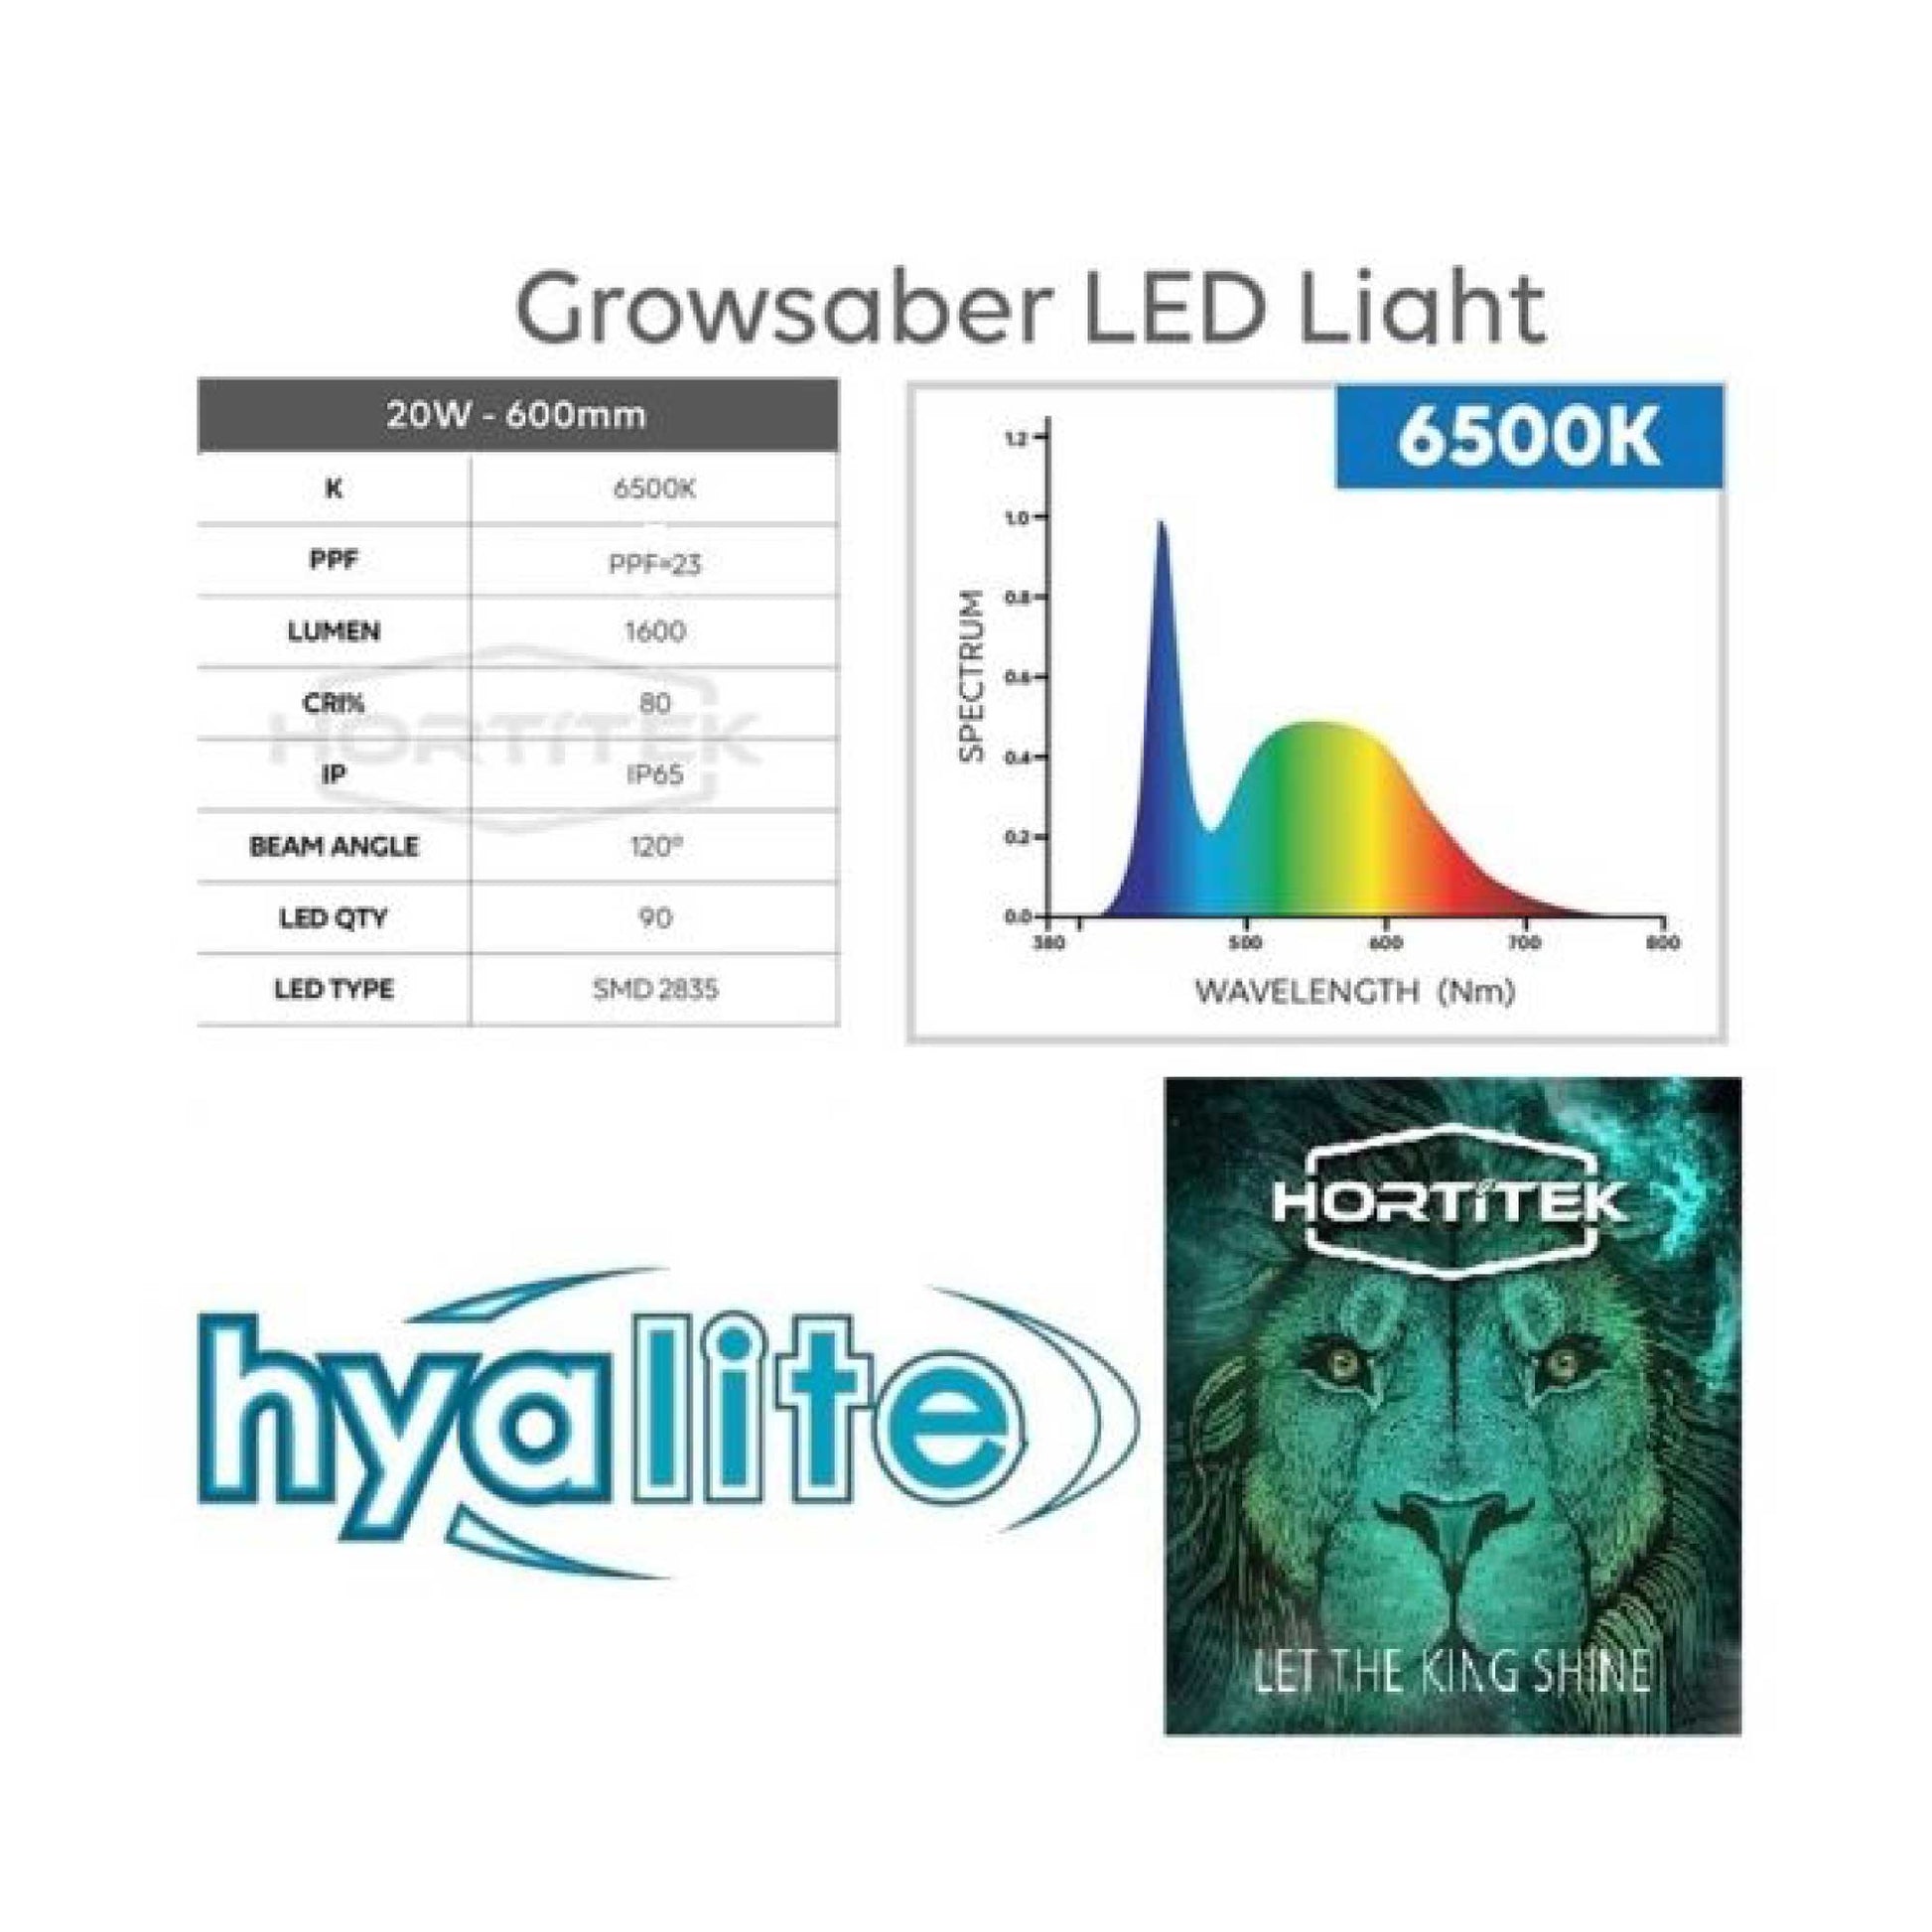 Growsaber Hydroponic Led Lights Grow Light Hydro Plant Growing 20W 6500K 600mm